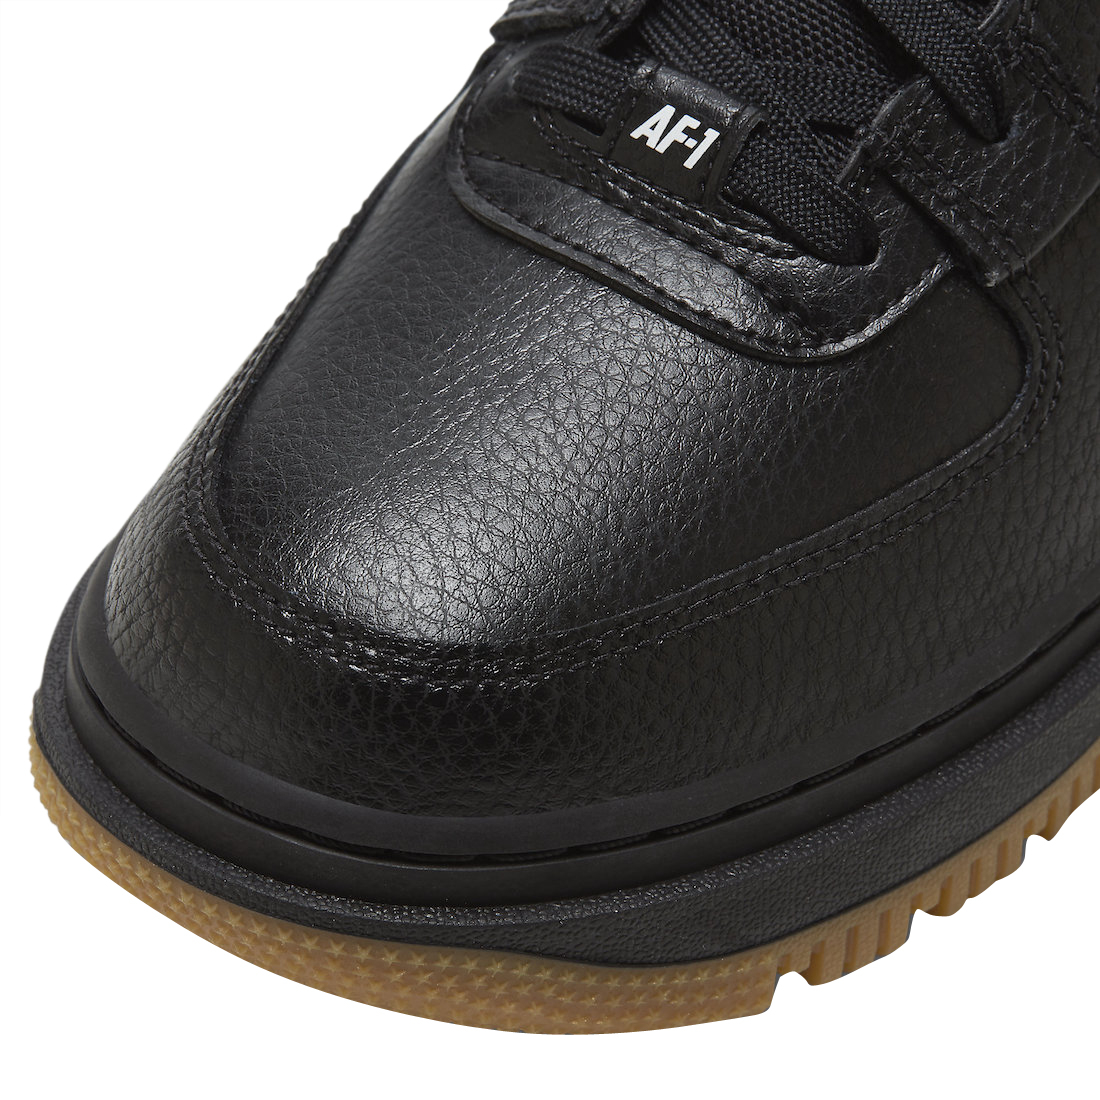 Nike Air Force 1 High Utility 2 0 Black Gum DC3584-001 Womens Sneakers